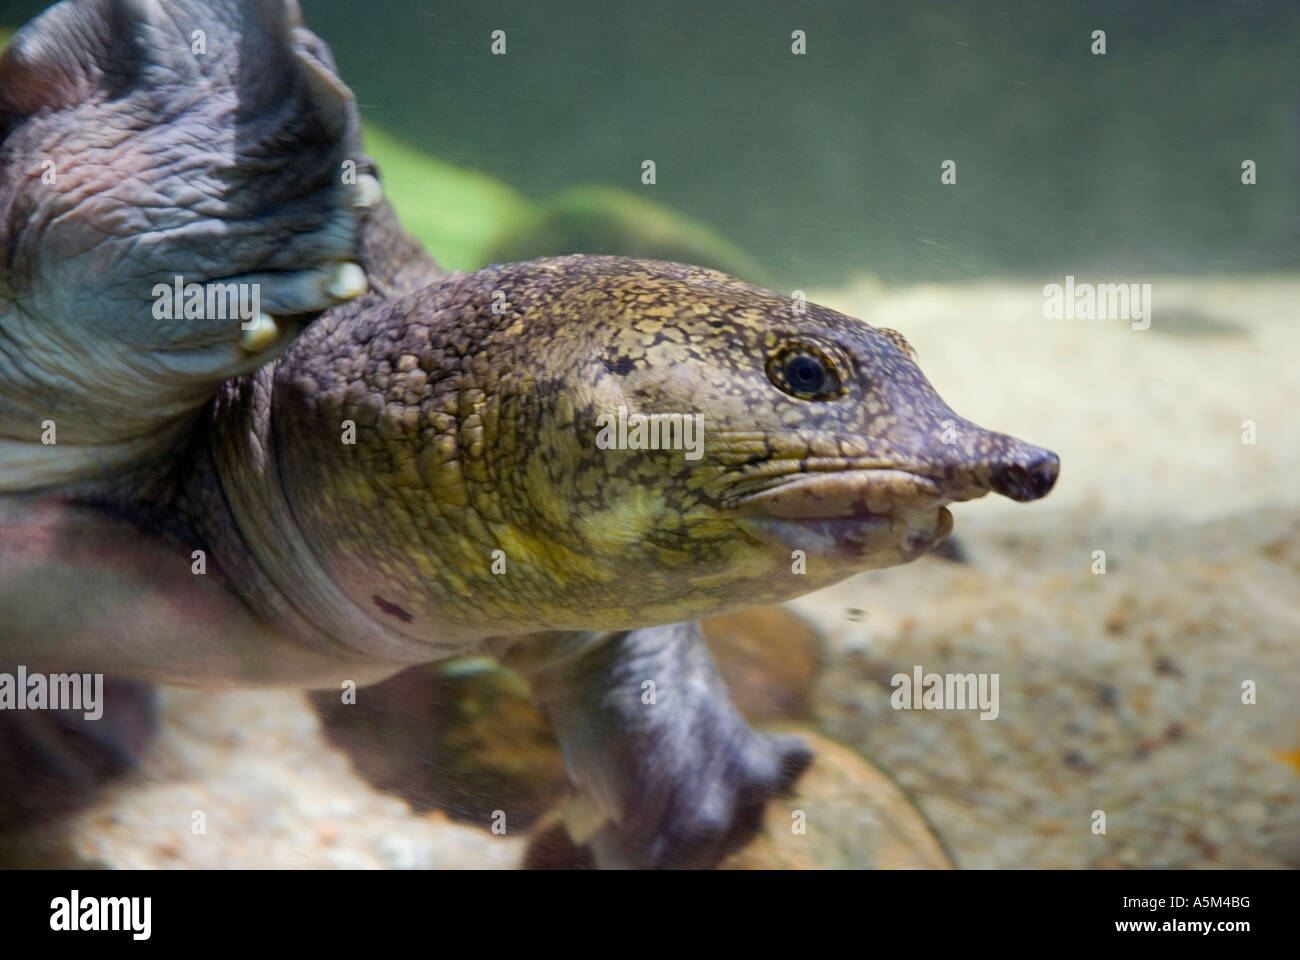 The Asian Soft shelled freshwater turtle amyda cartilaginea Stock Photo